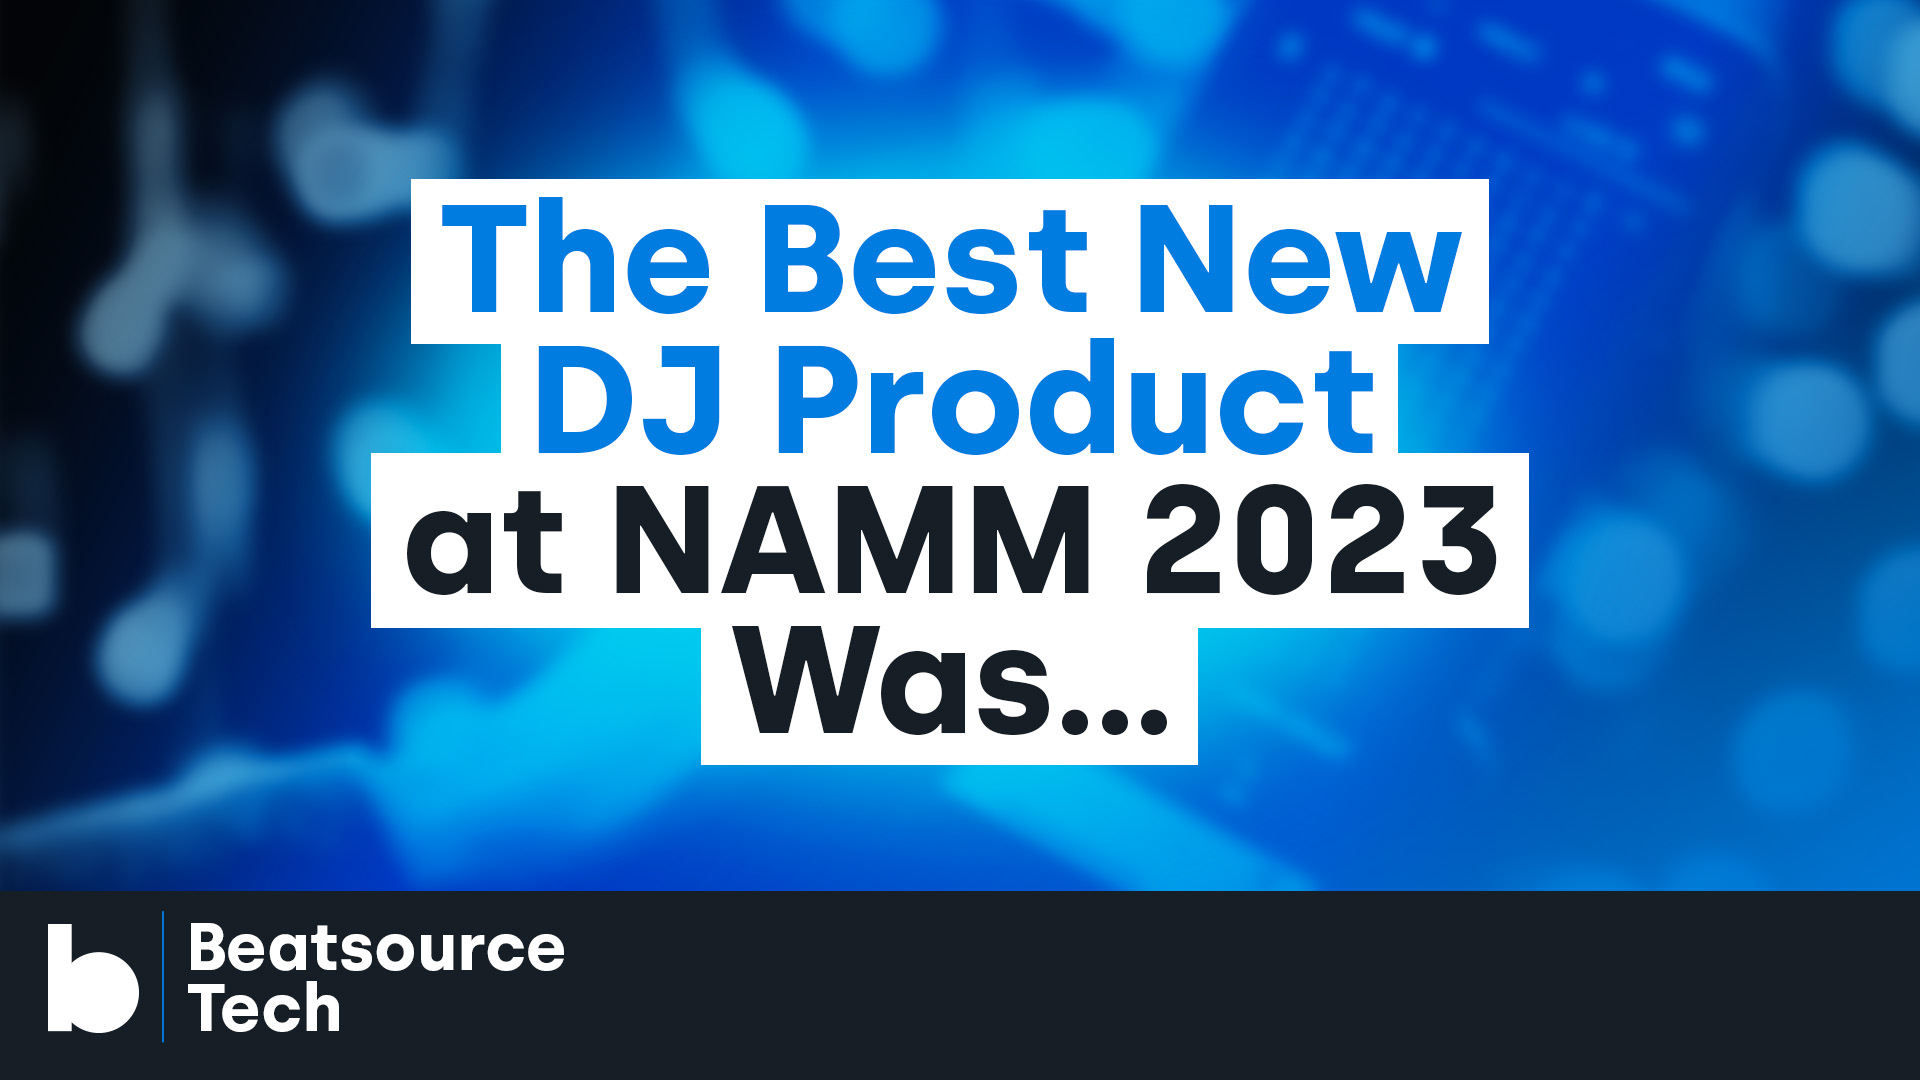 NAMM 2023 - The New Hercules DJ Control Inpulse T7